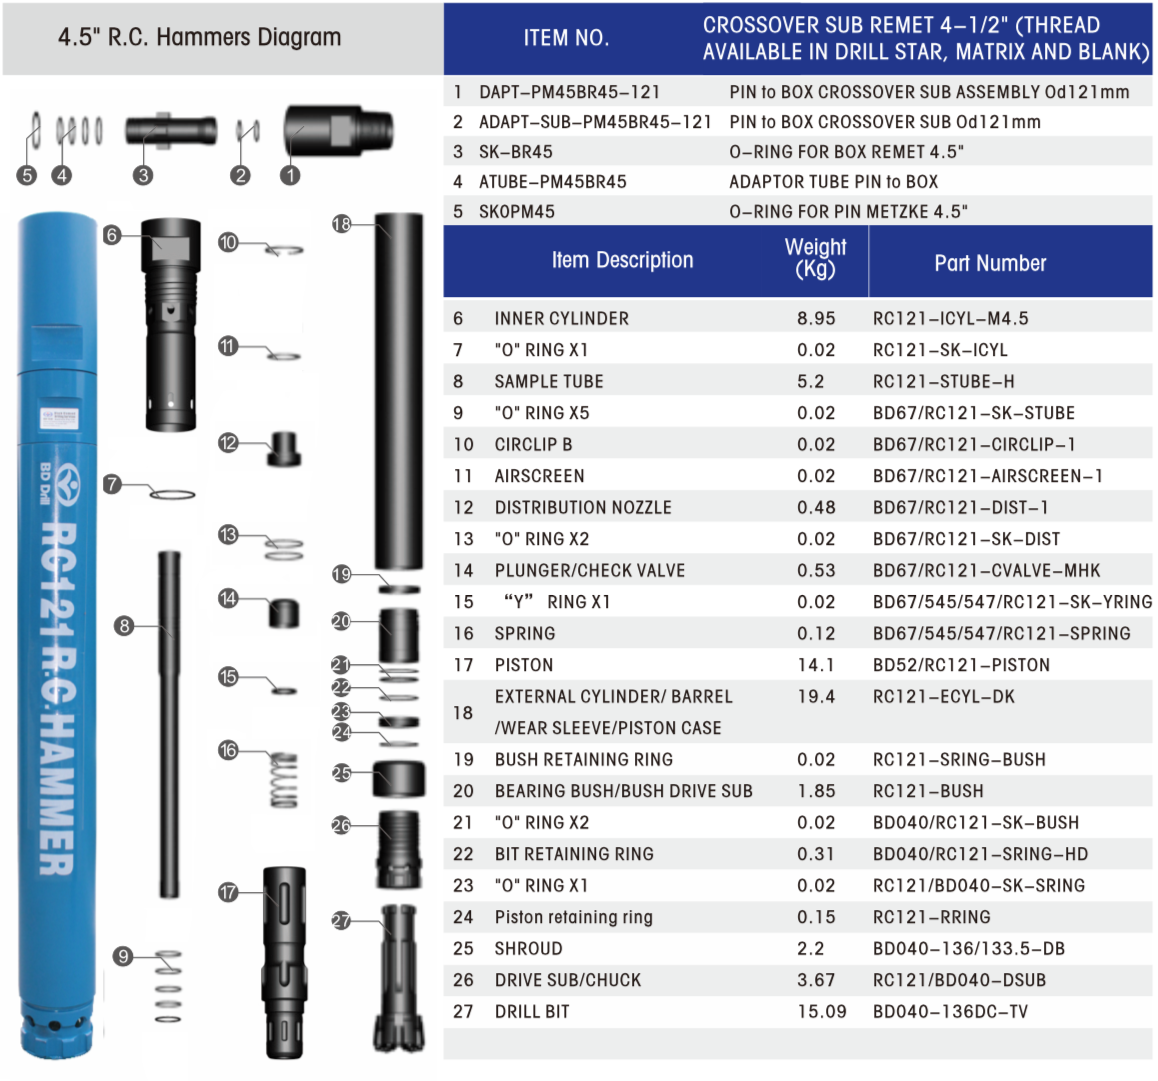 RC121-BD040 RC Hammer parts list